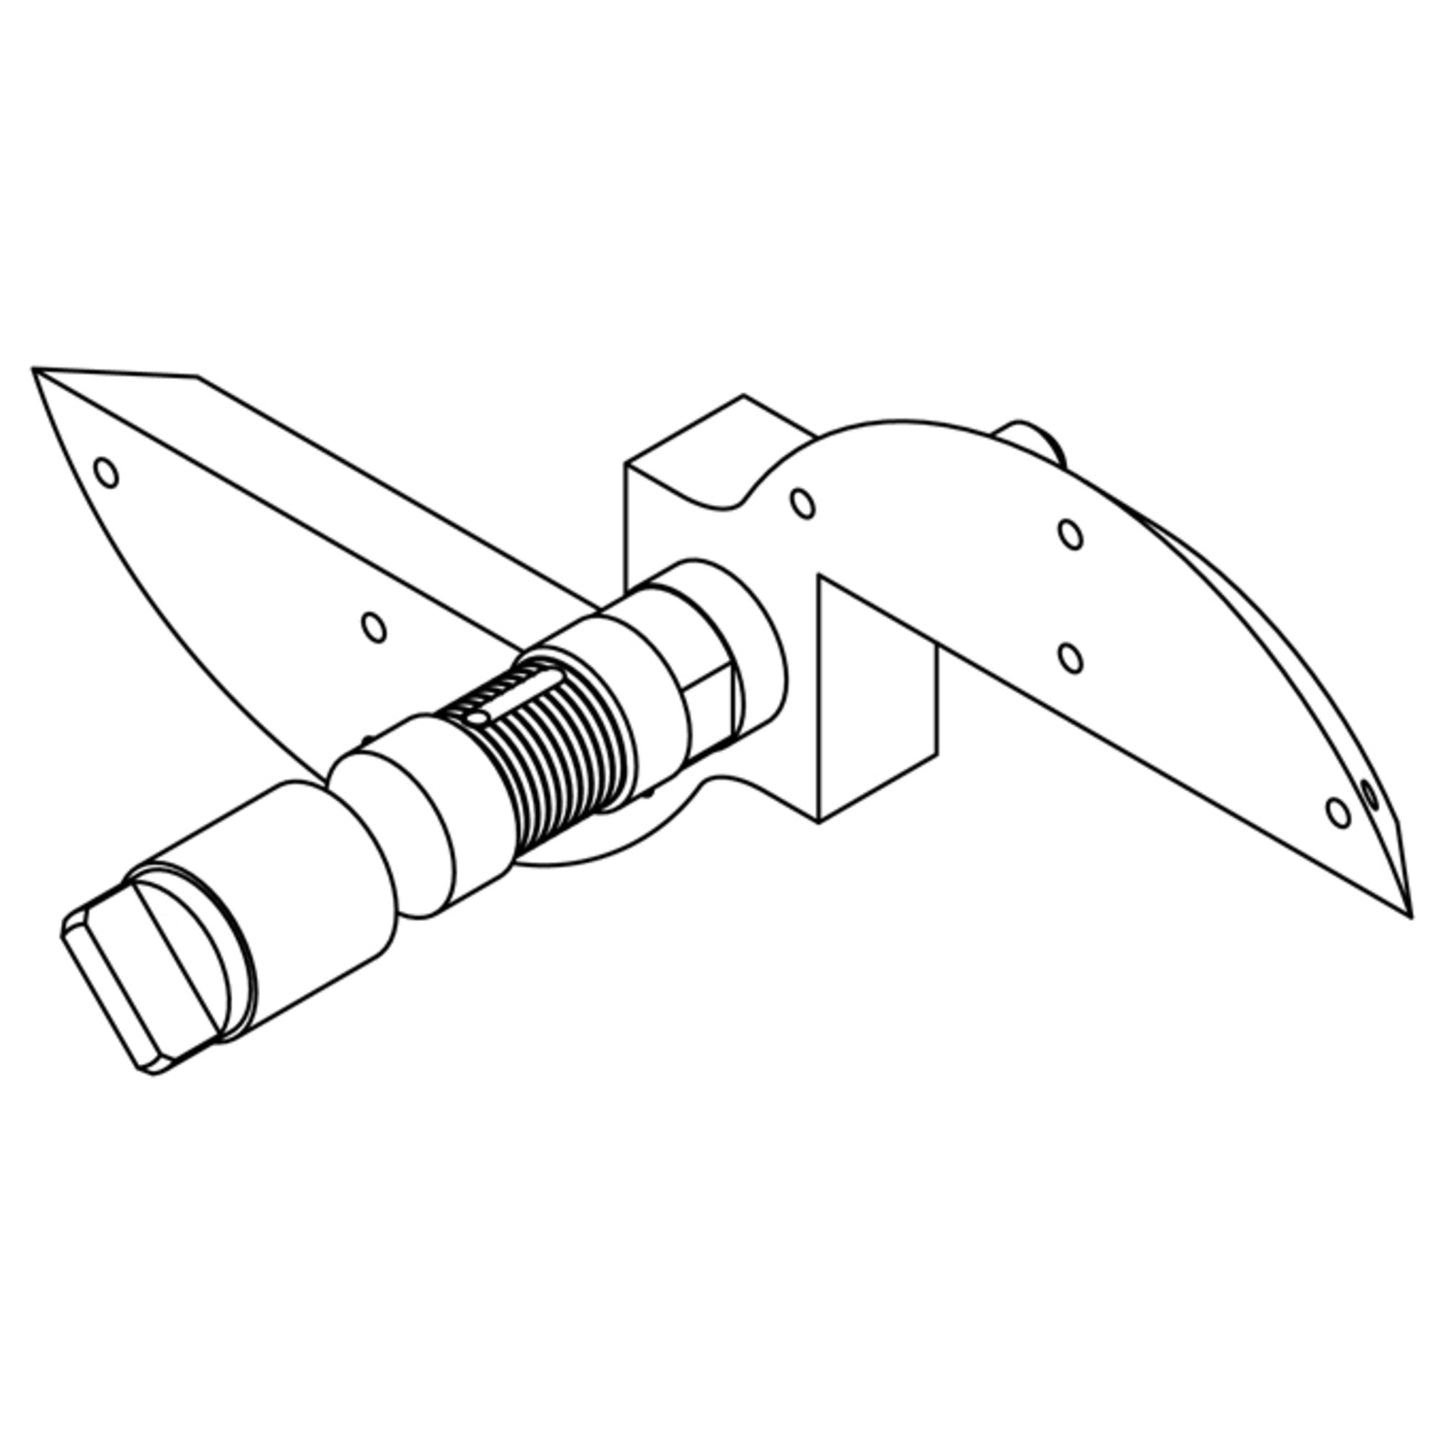 FVS-P16 - Shaft with Blade Holder